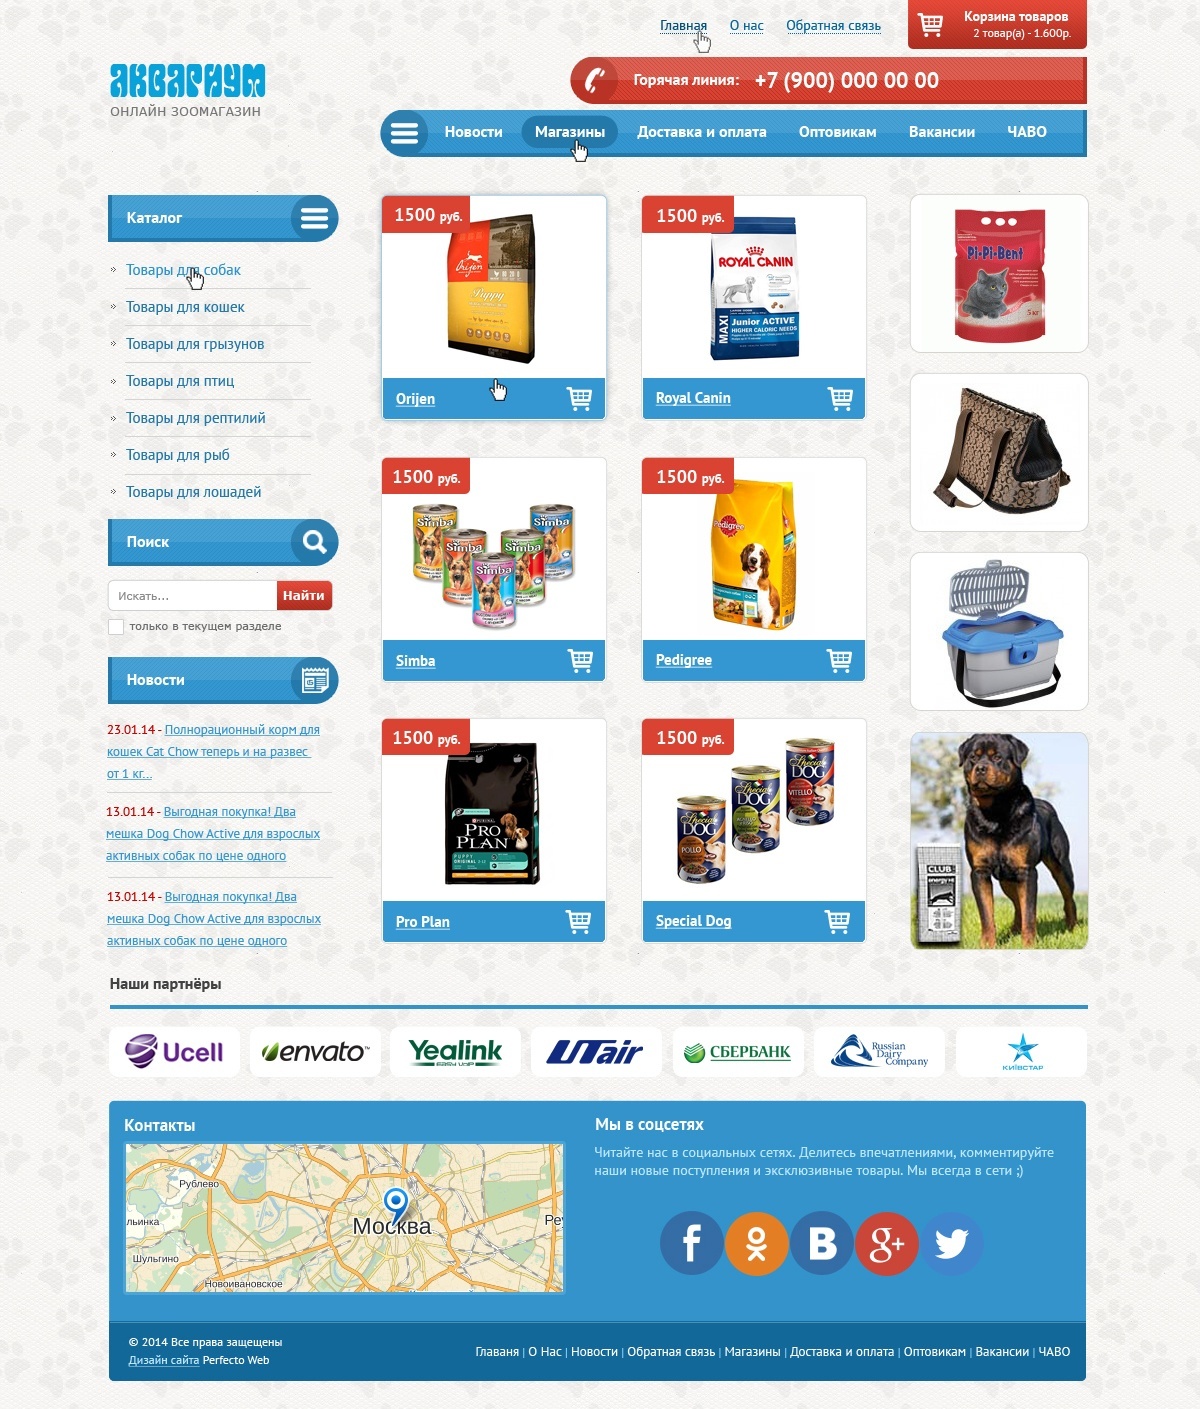 Aquarium - Online pet store №2- Products catalog